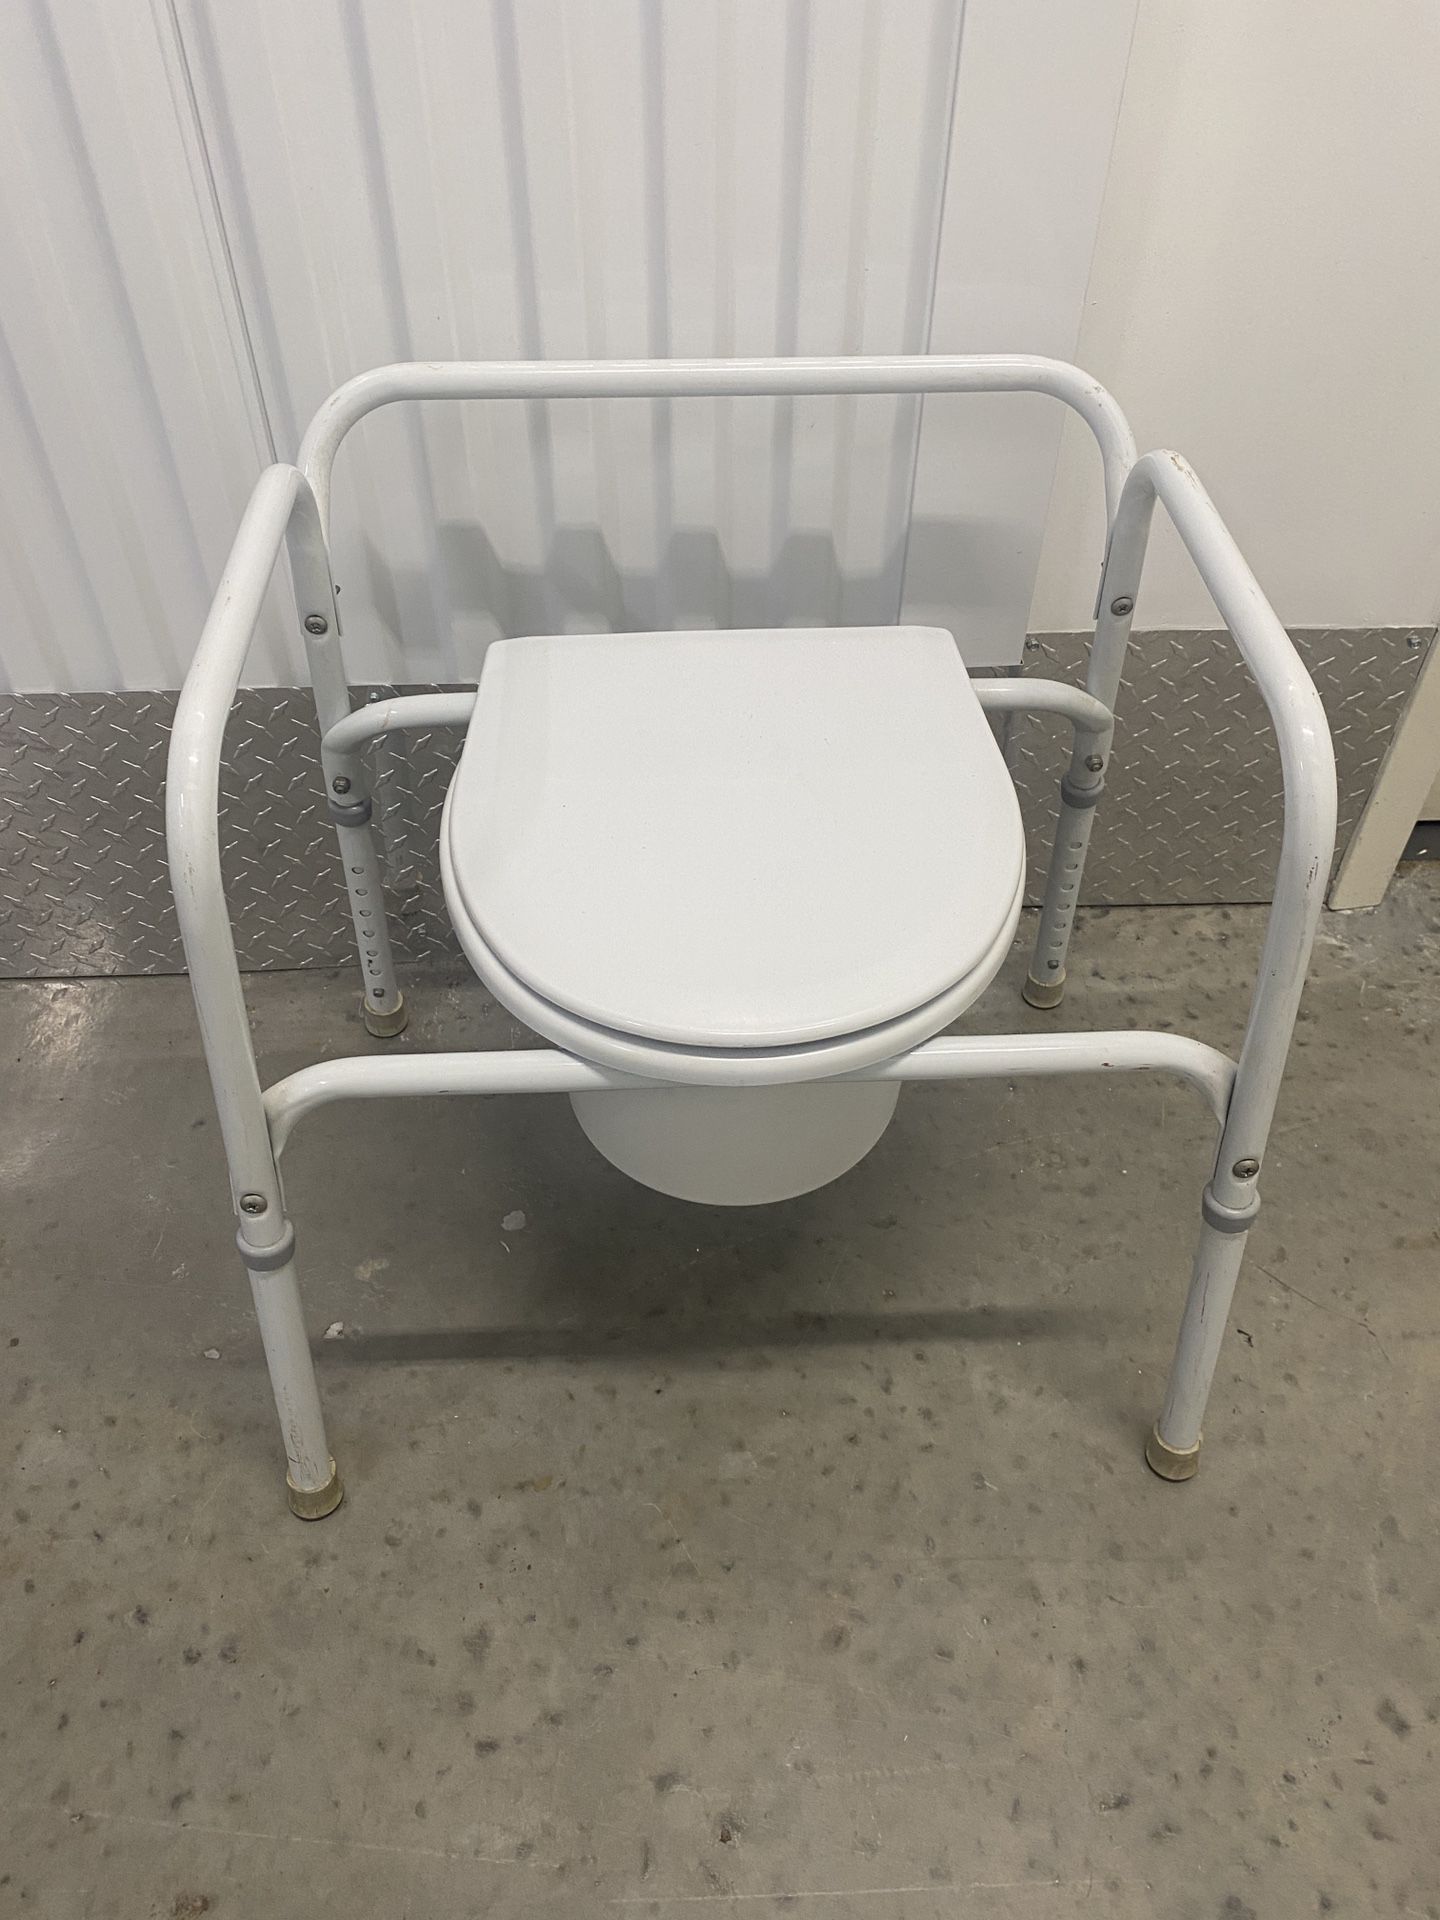 Commode toilet Seat